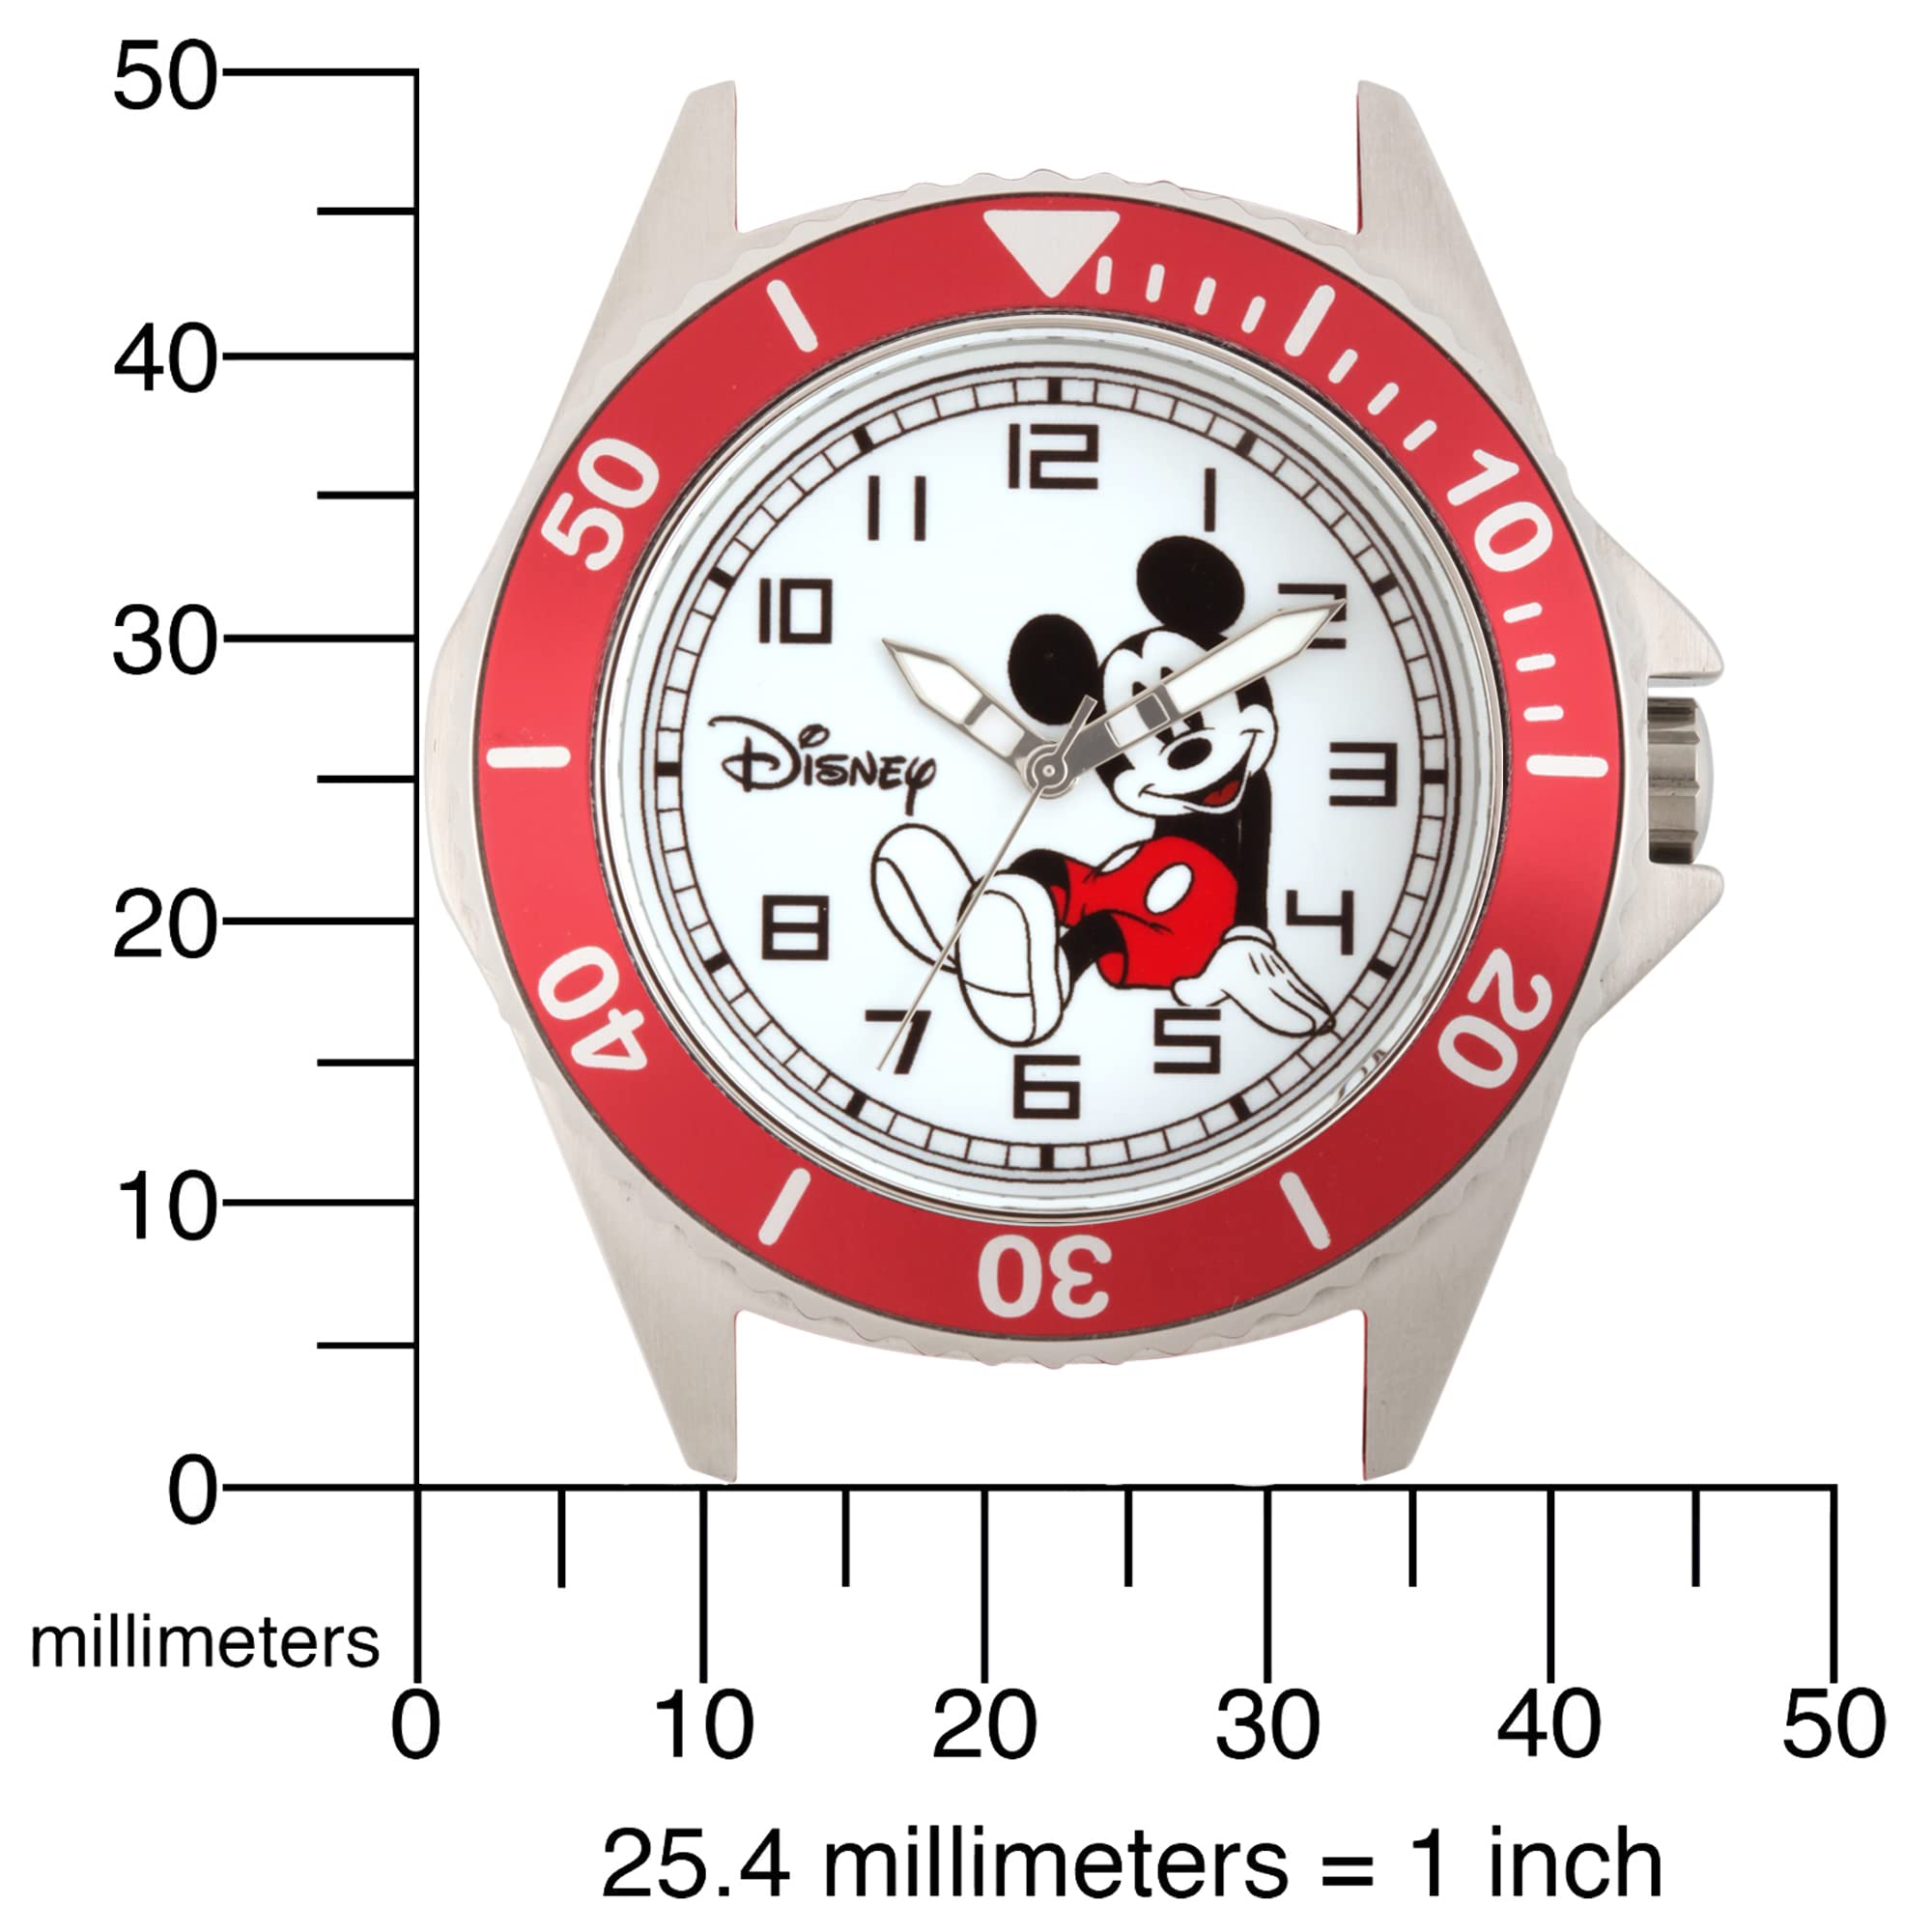 Disney Mickey Mouse Adult Honor Analog Quartz Watch